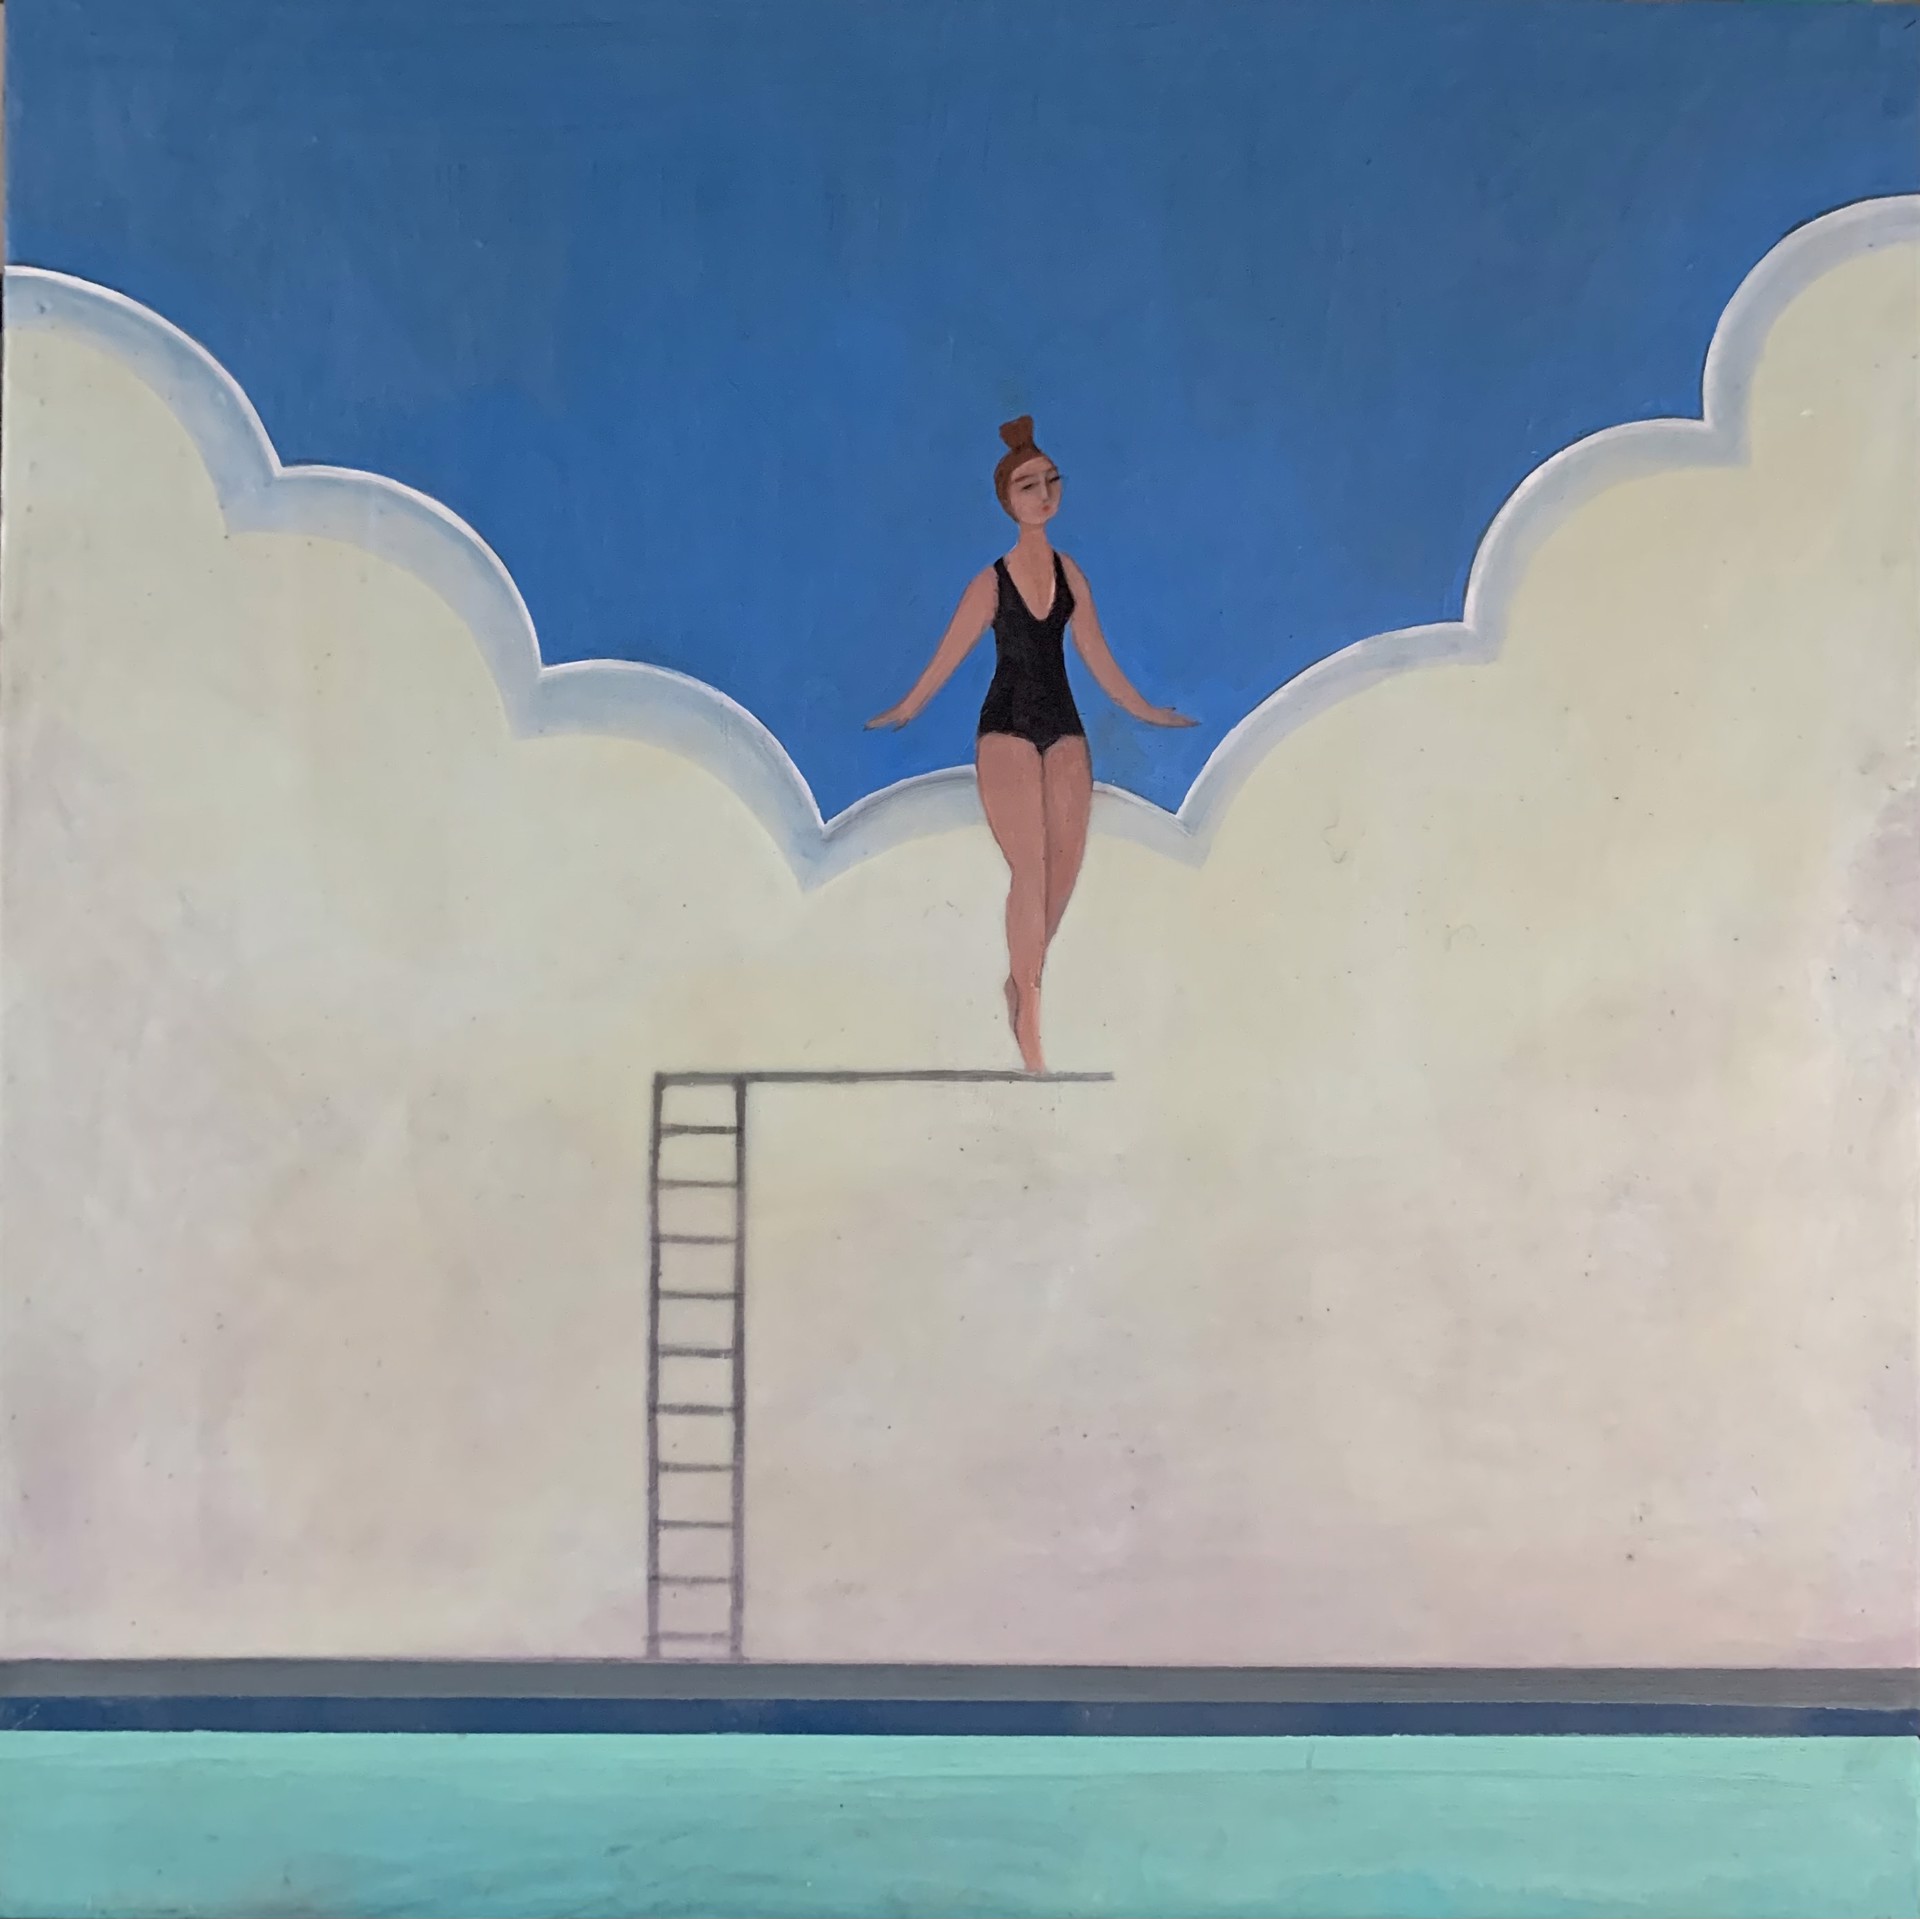 Sky Diver by Jeni Stallings